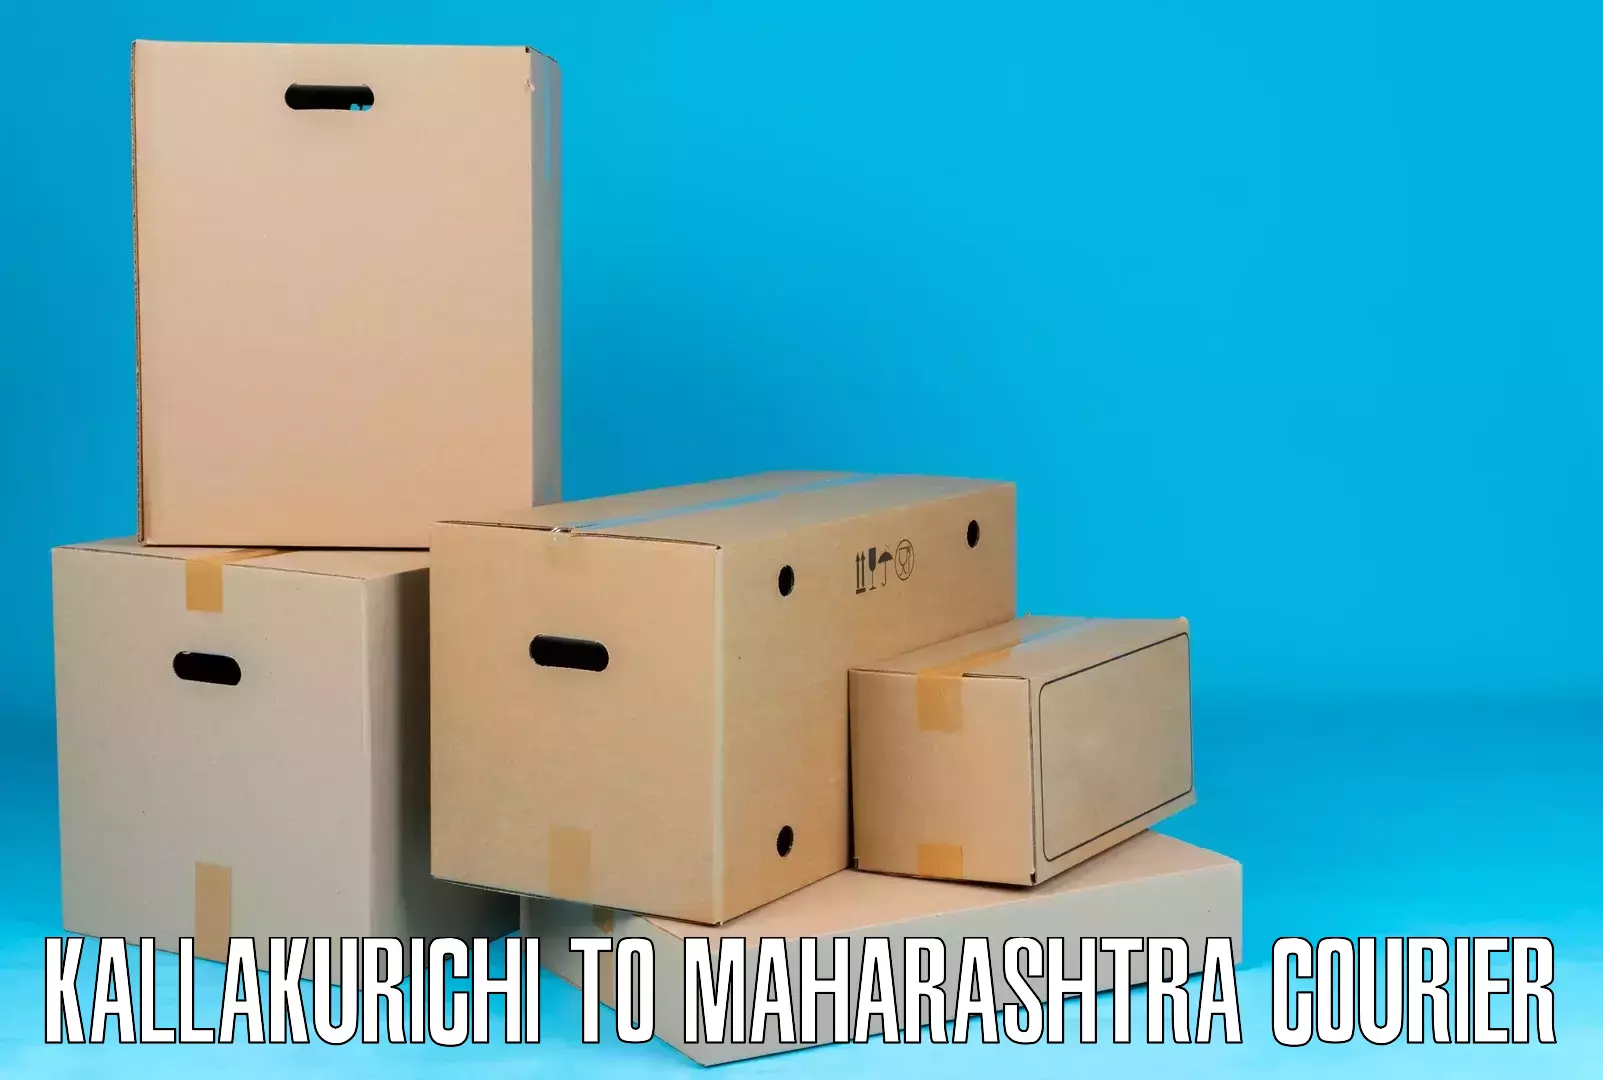 Business shipping needs Kallakurichi to Solapur